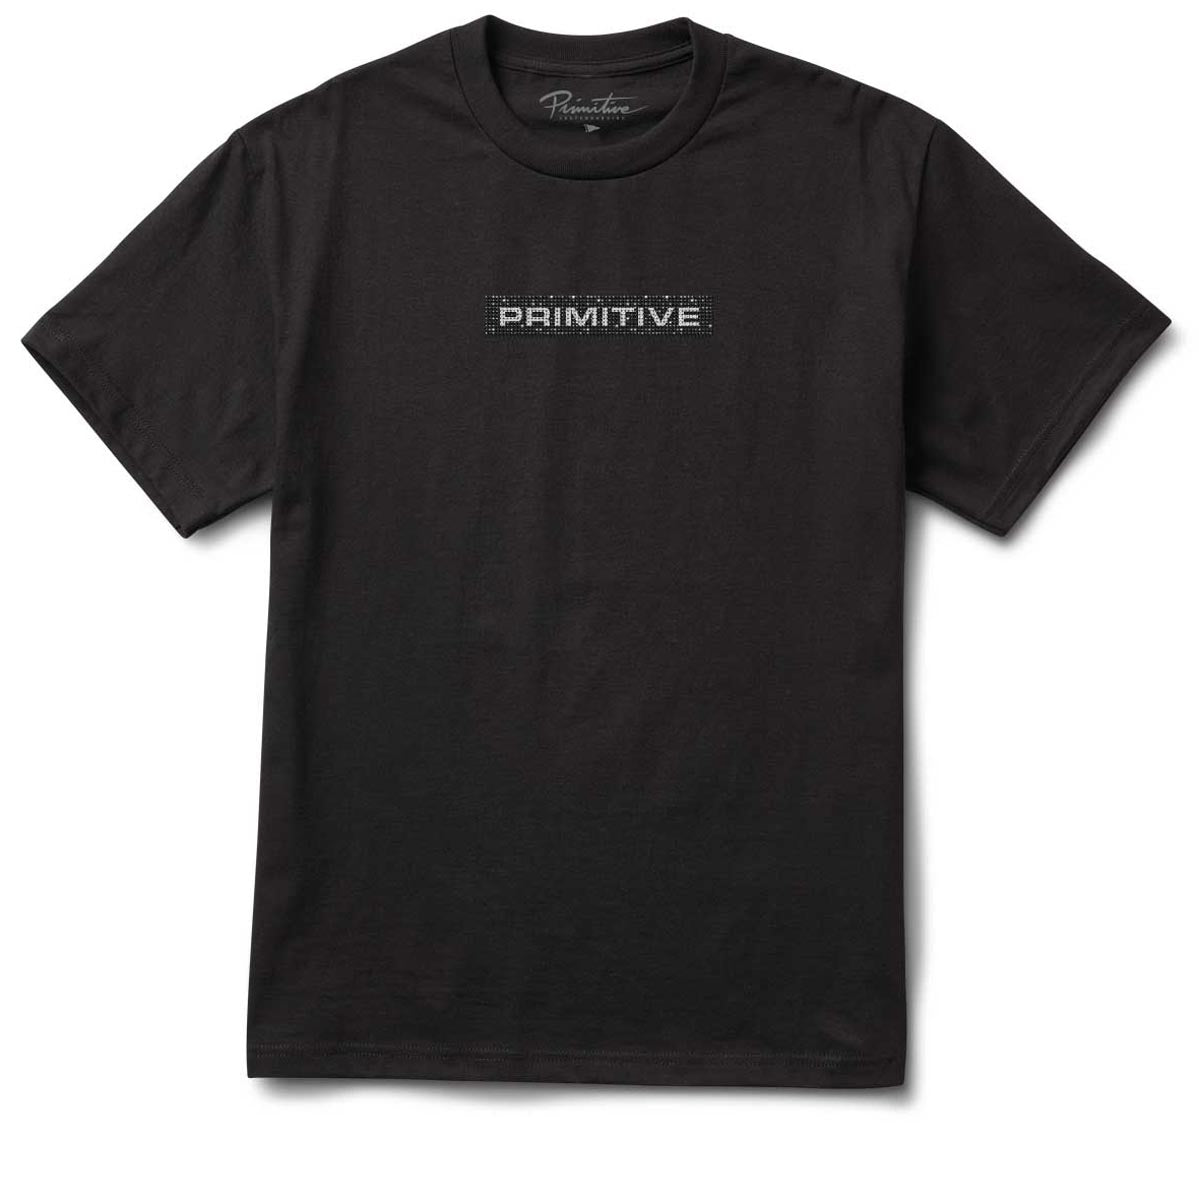 Primitive Boxed Rhinestone T-Shirt - Black image 1